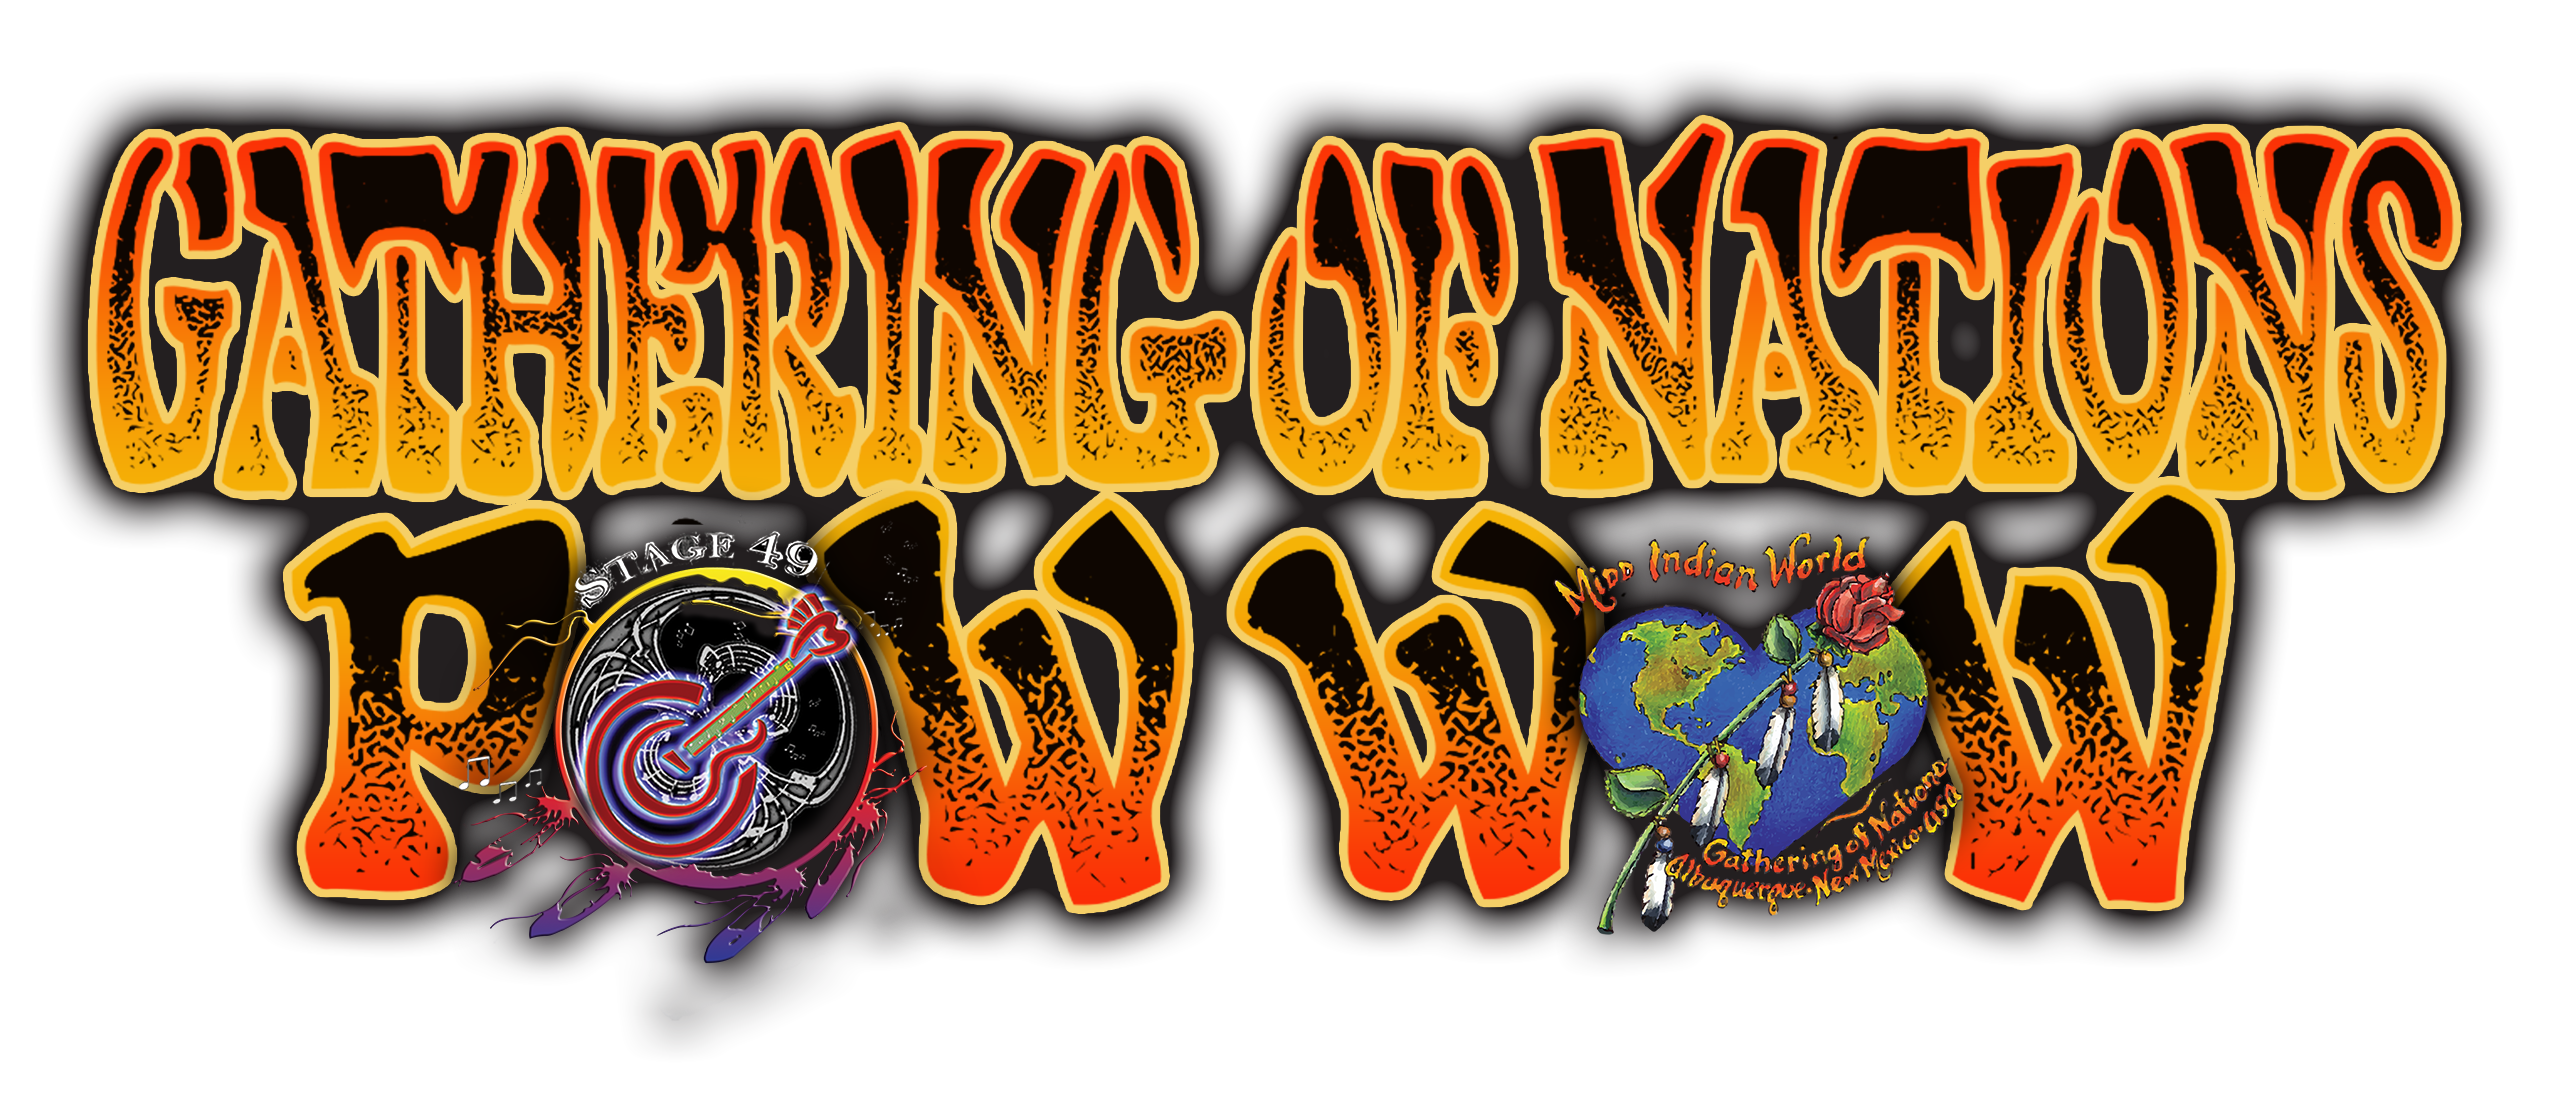 gathering of nations logo 2019